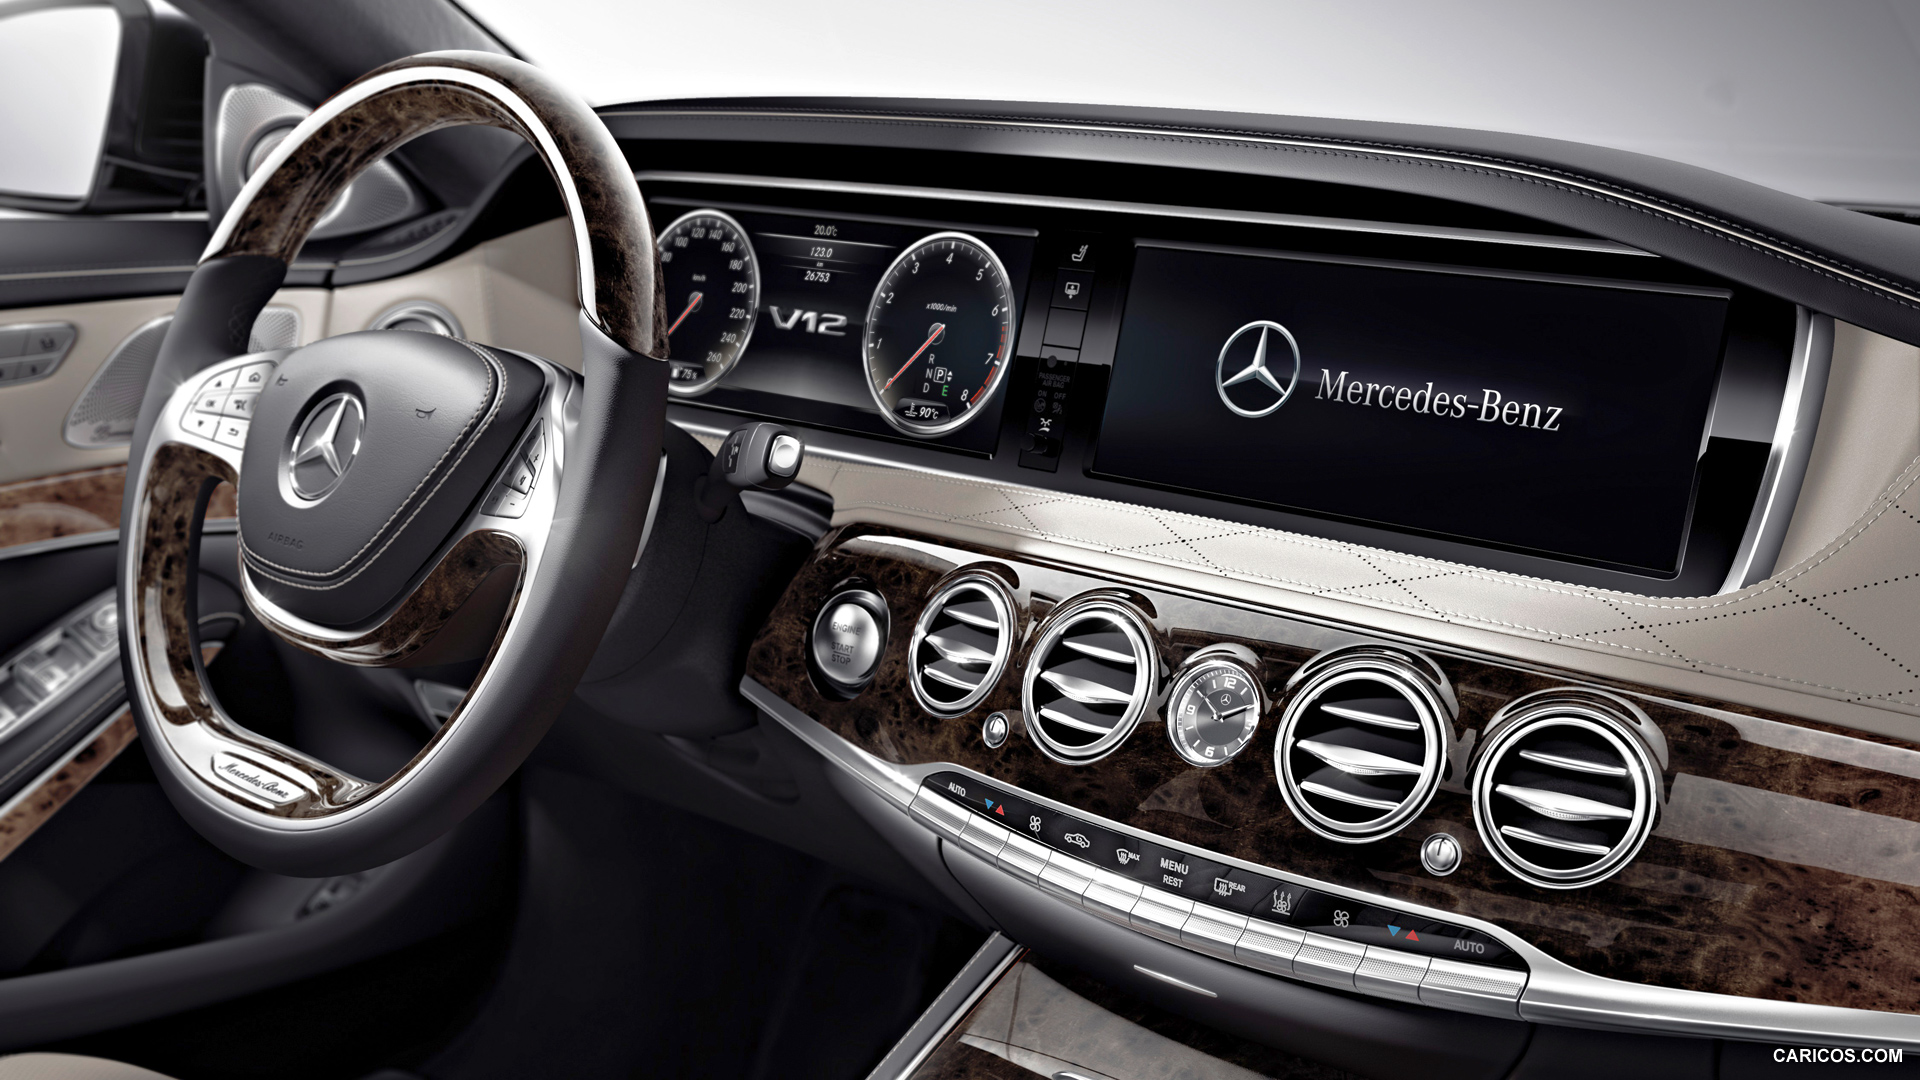 2015 Mercedes-Benz S600 Cockpit - Interior, #8 of 10